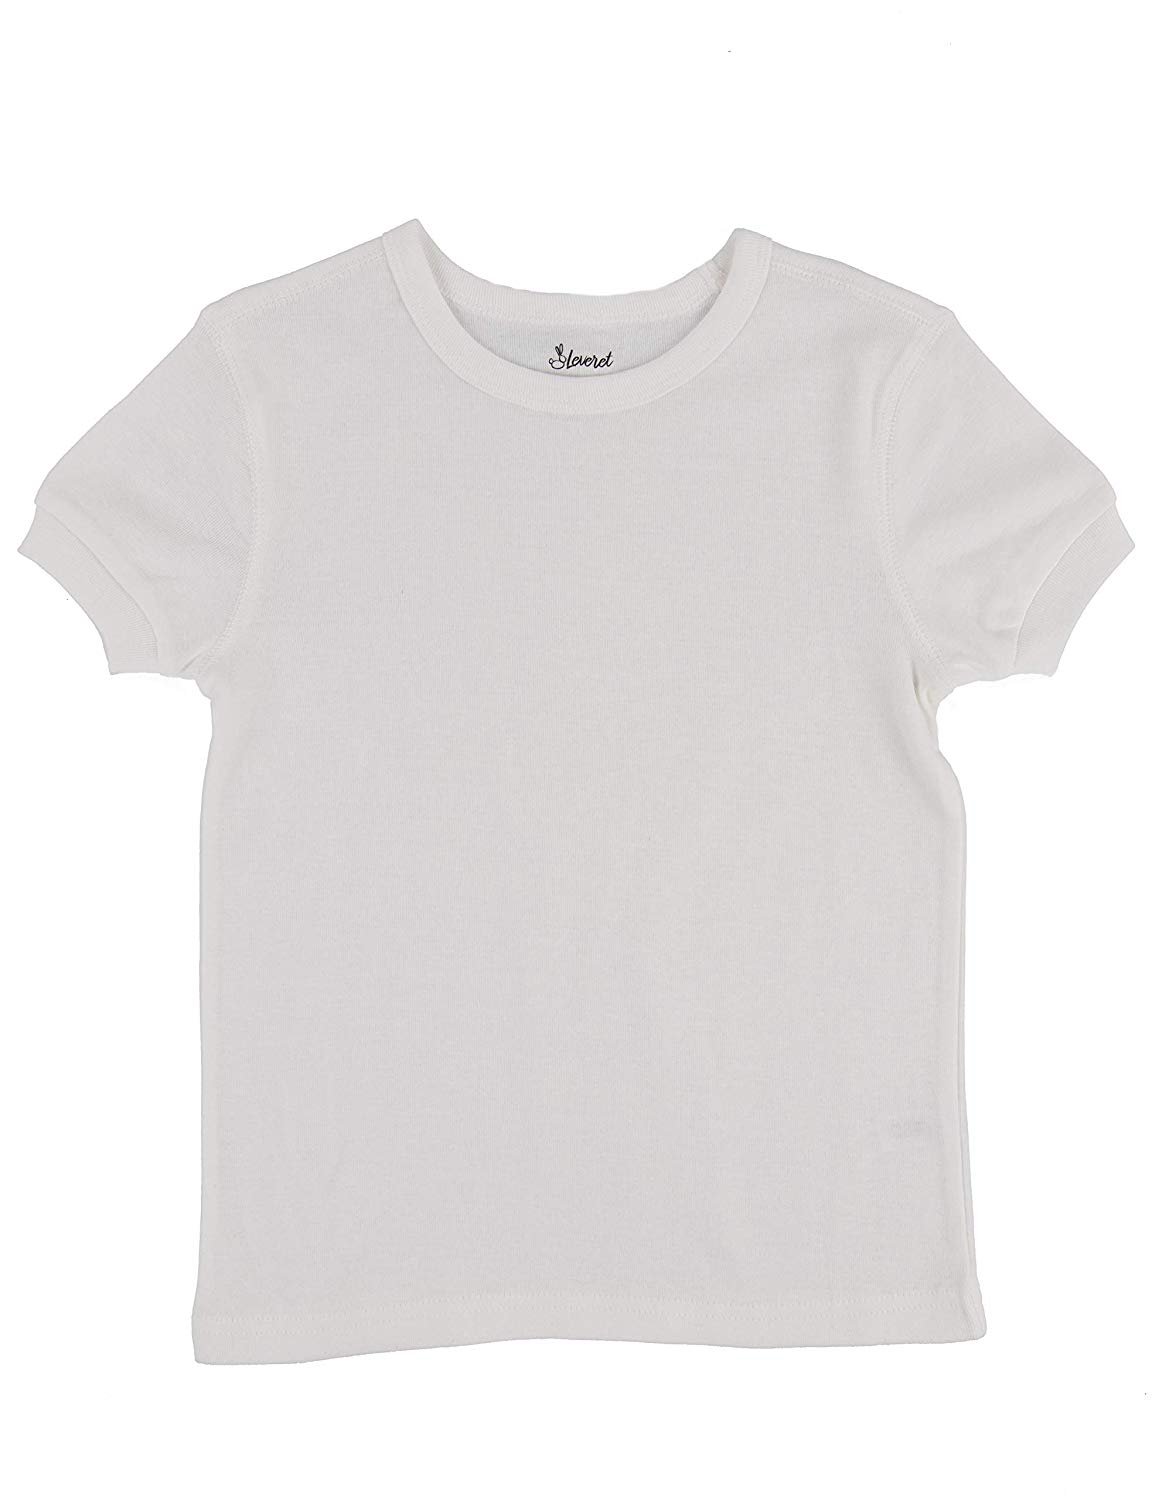 Leveret Short Sleeve Top Boys Girls Kids T-Shirt 100% Cotton (Dark Grey,Size 6 Years) - image 1 of 10